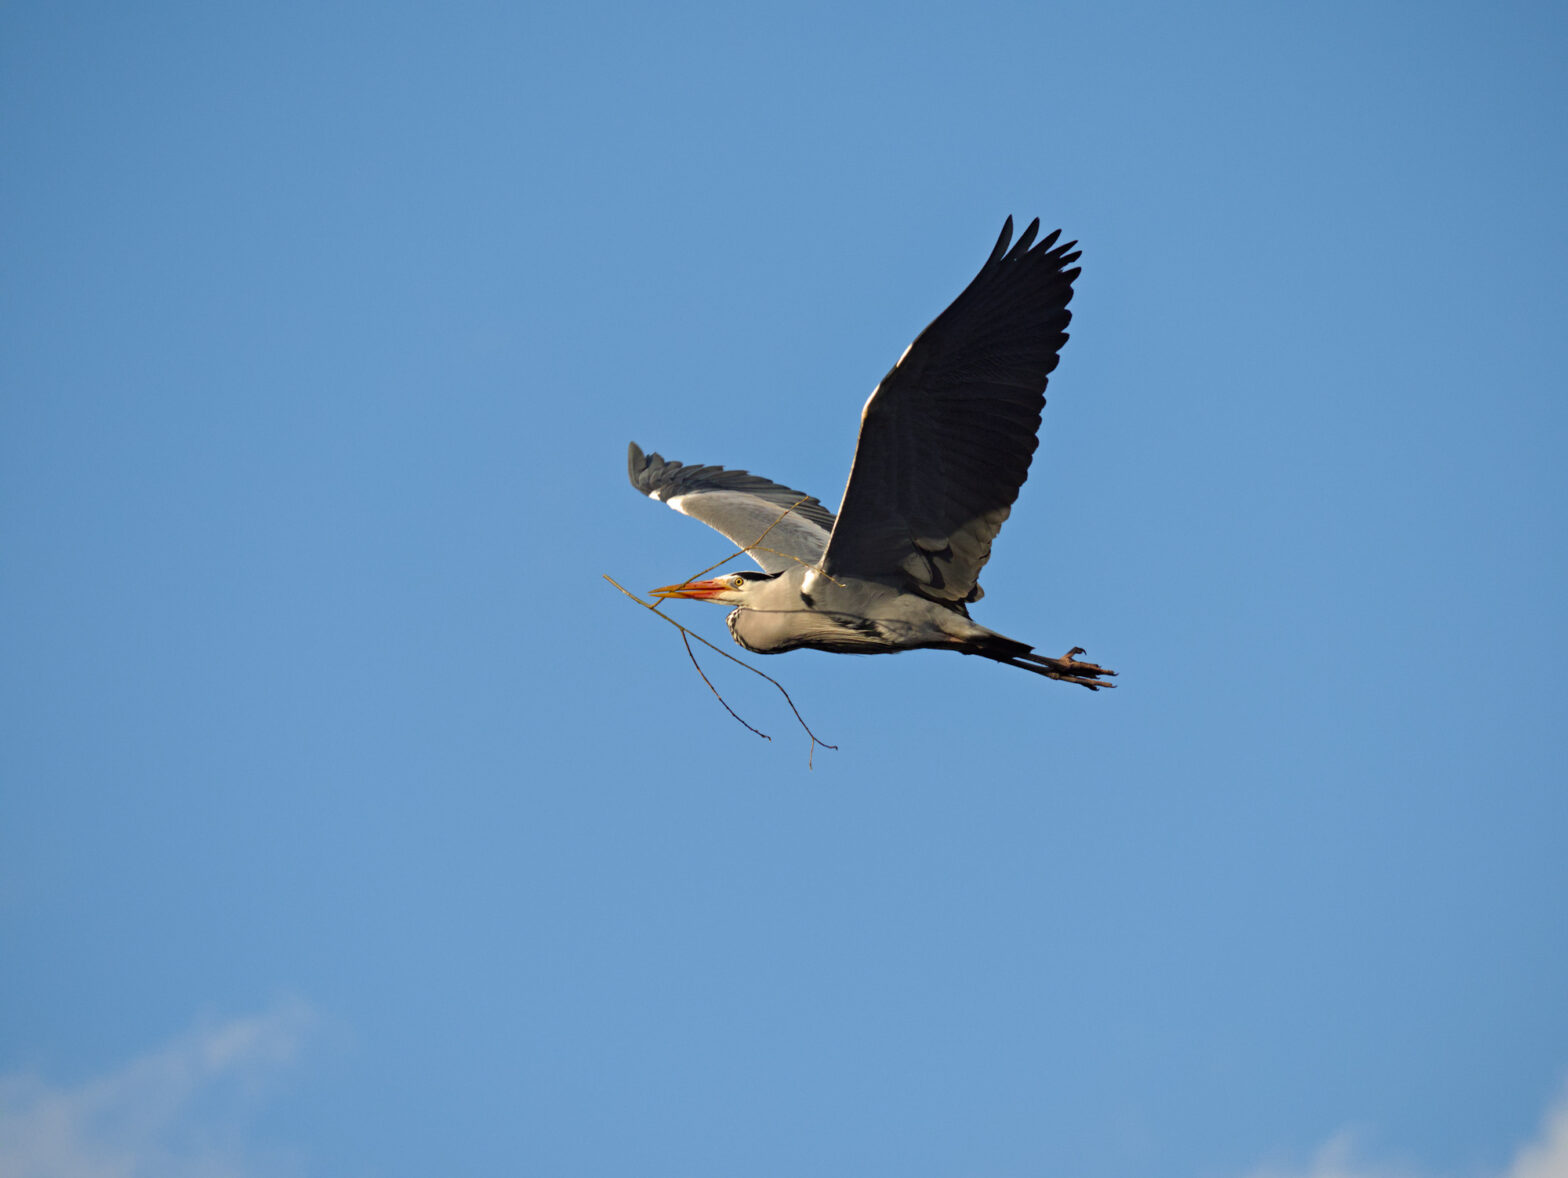 Grey heron in flight against blue sky, carrying a twig in its beak